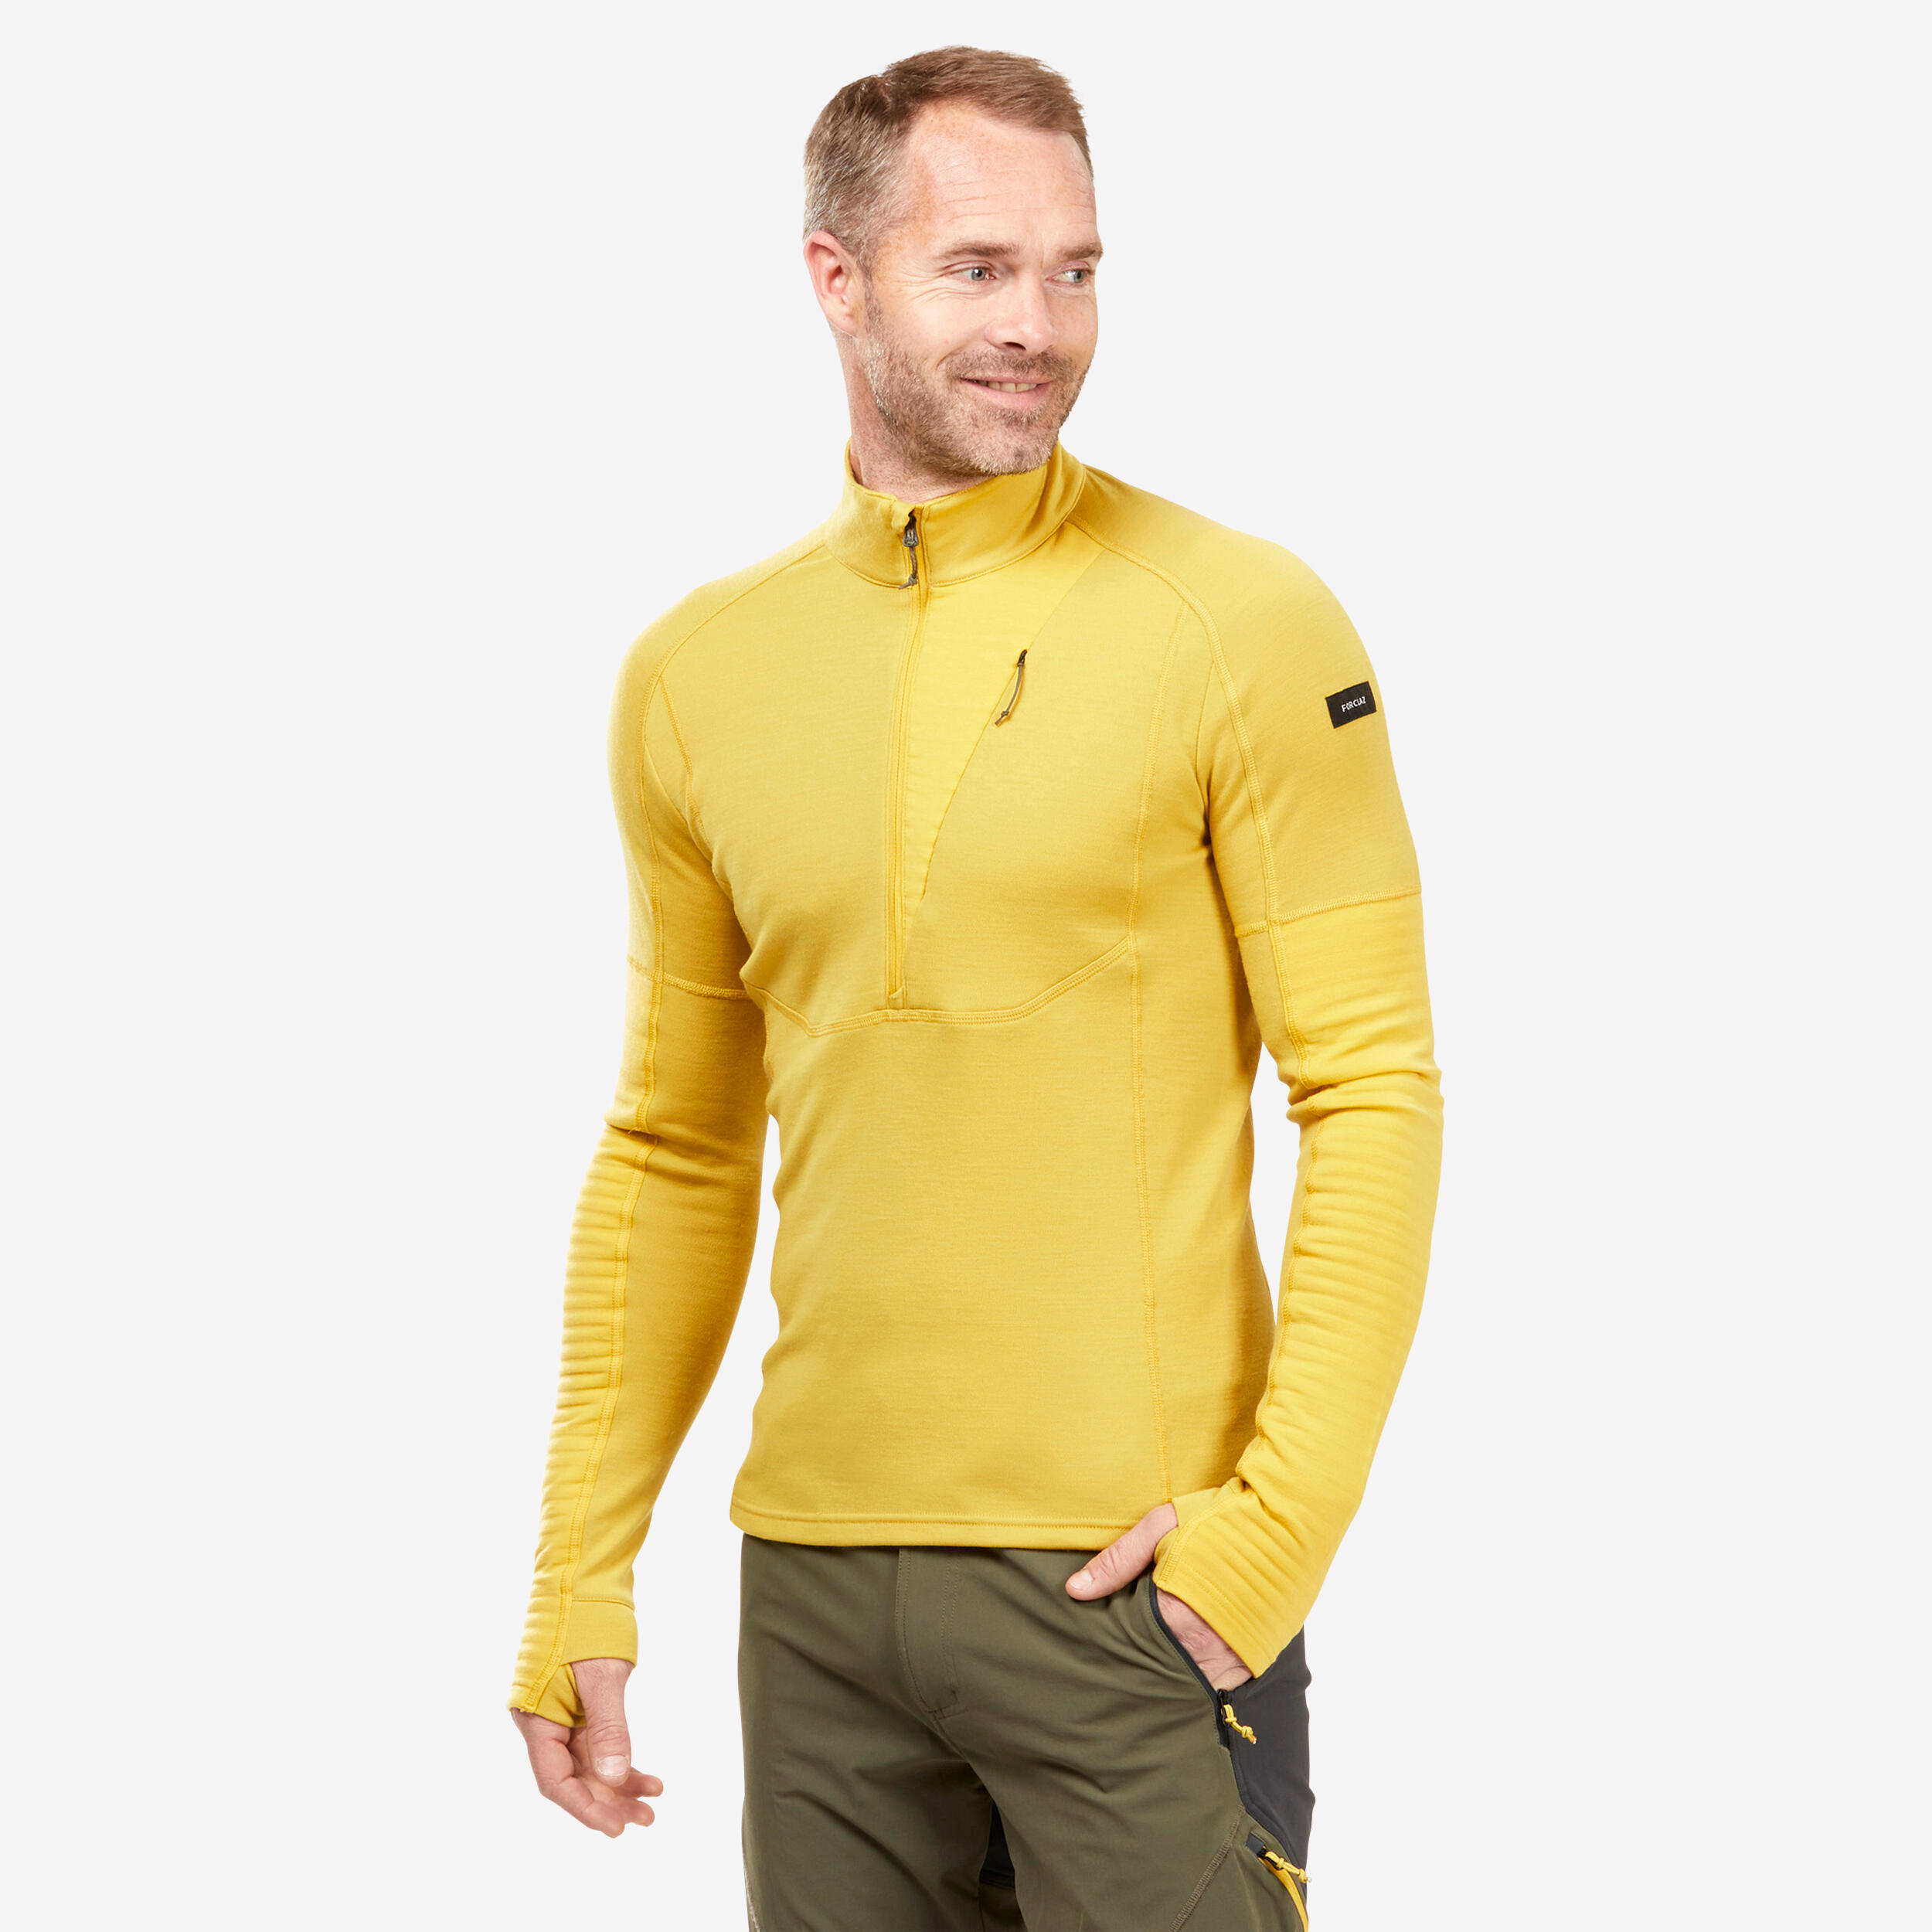 FORCLAZ Men's Merino Wool Long-Sleeved Trekking T-Shirt - MT900